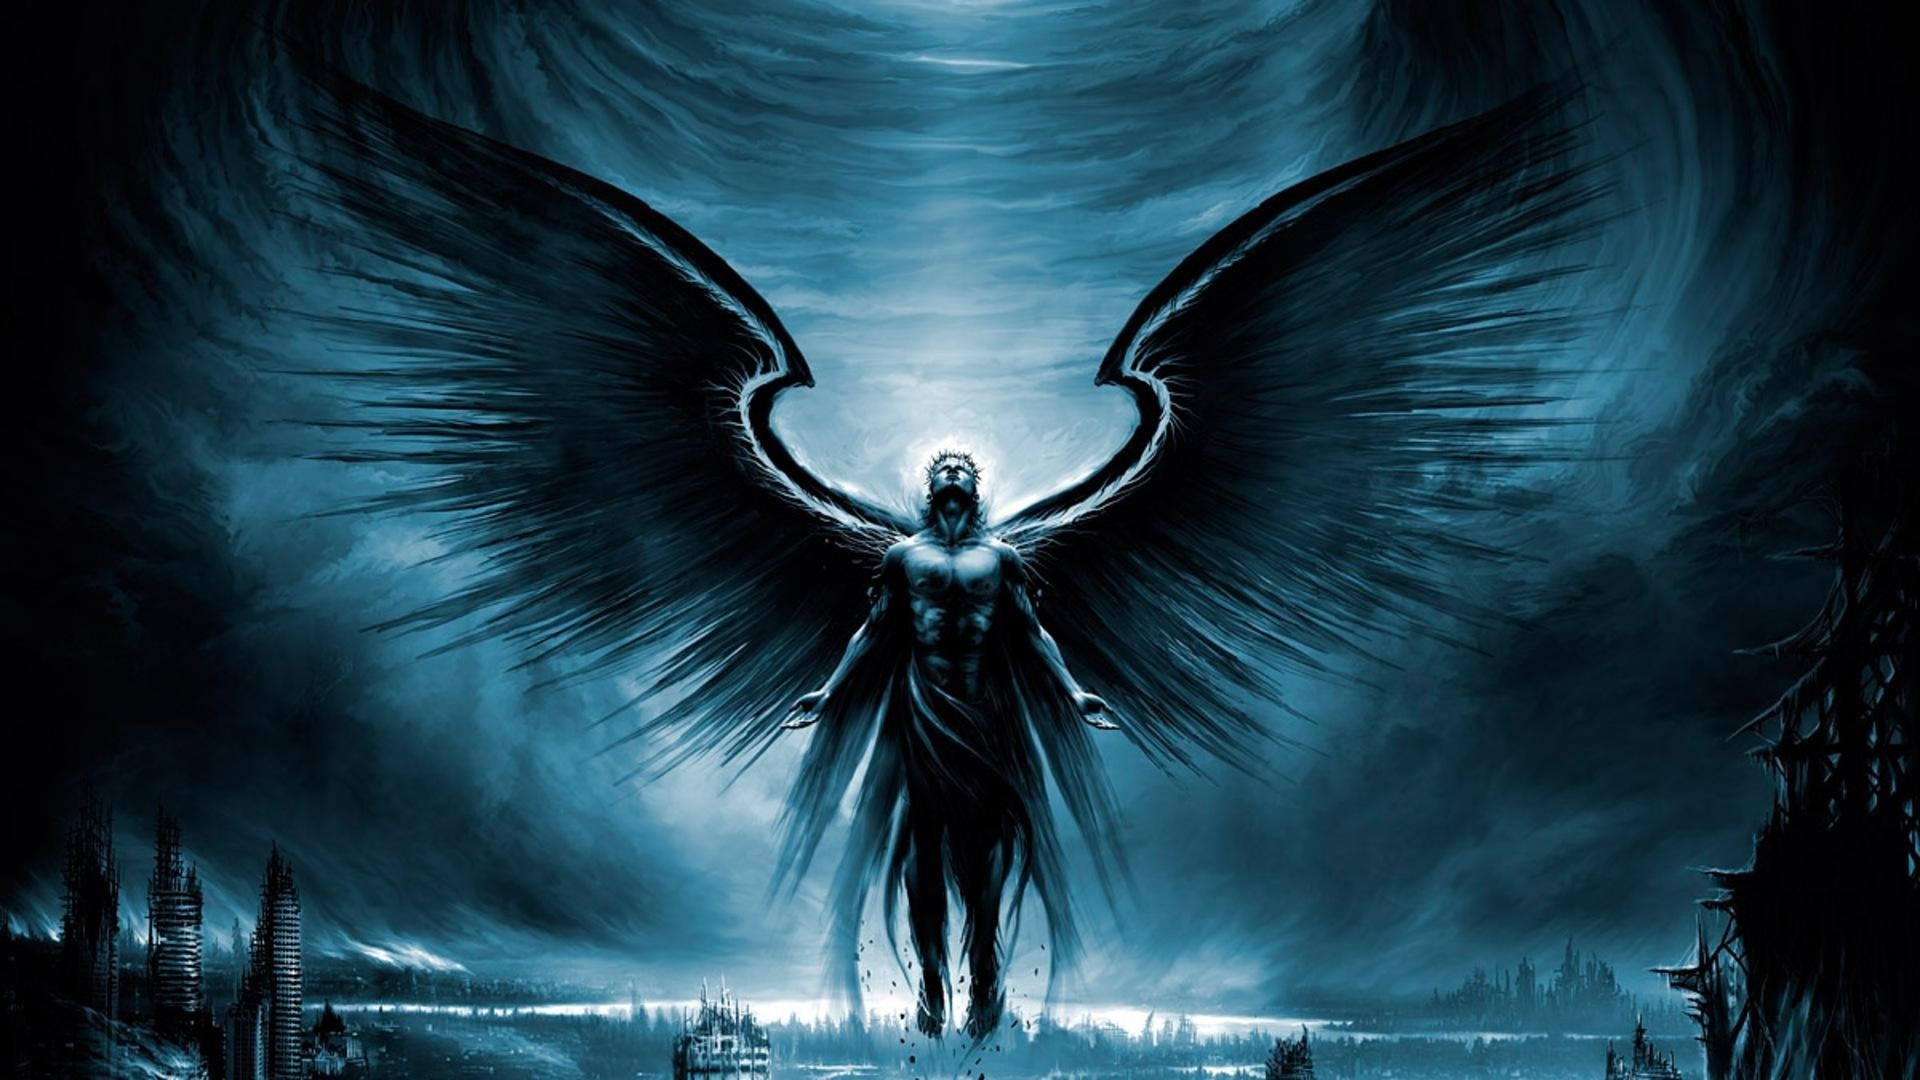 General 1920x1080 wings angel apocalyptic Vitaly S Alexius digital art blue